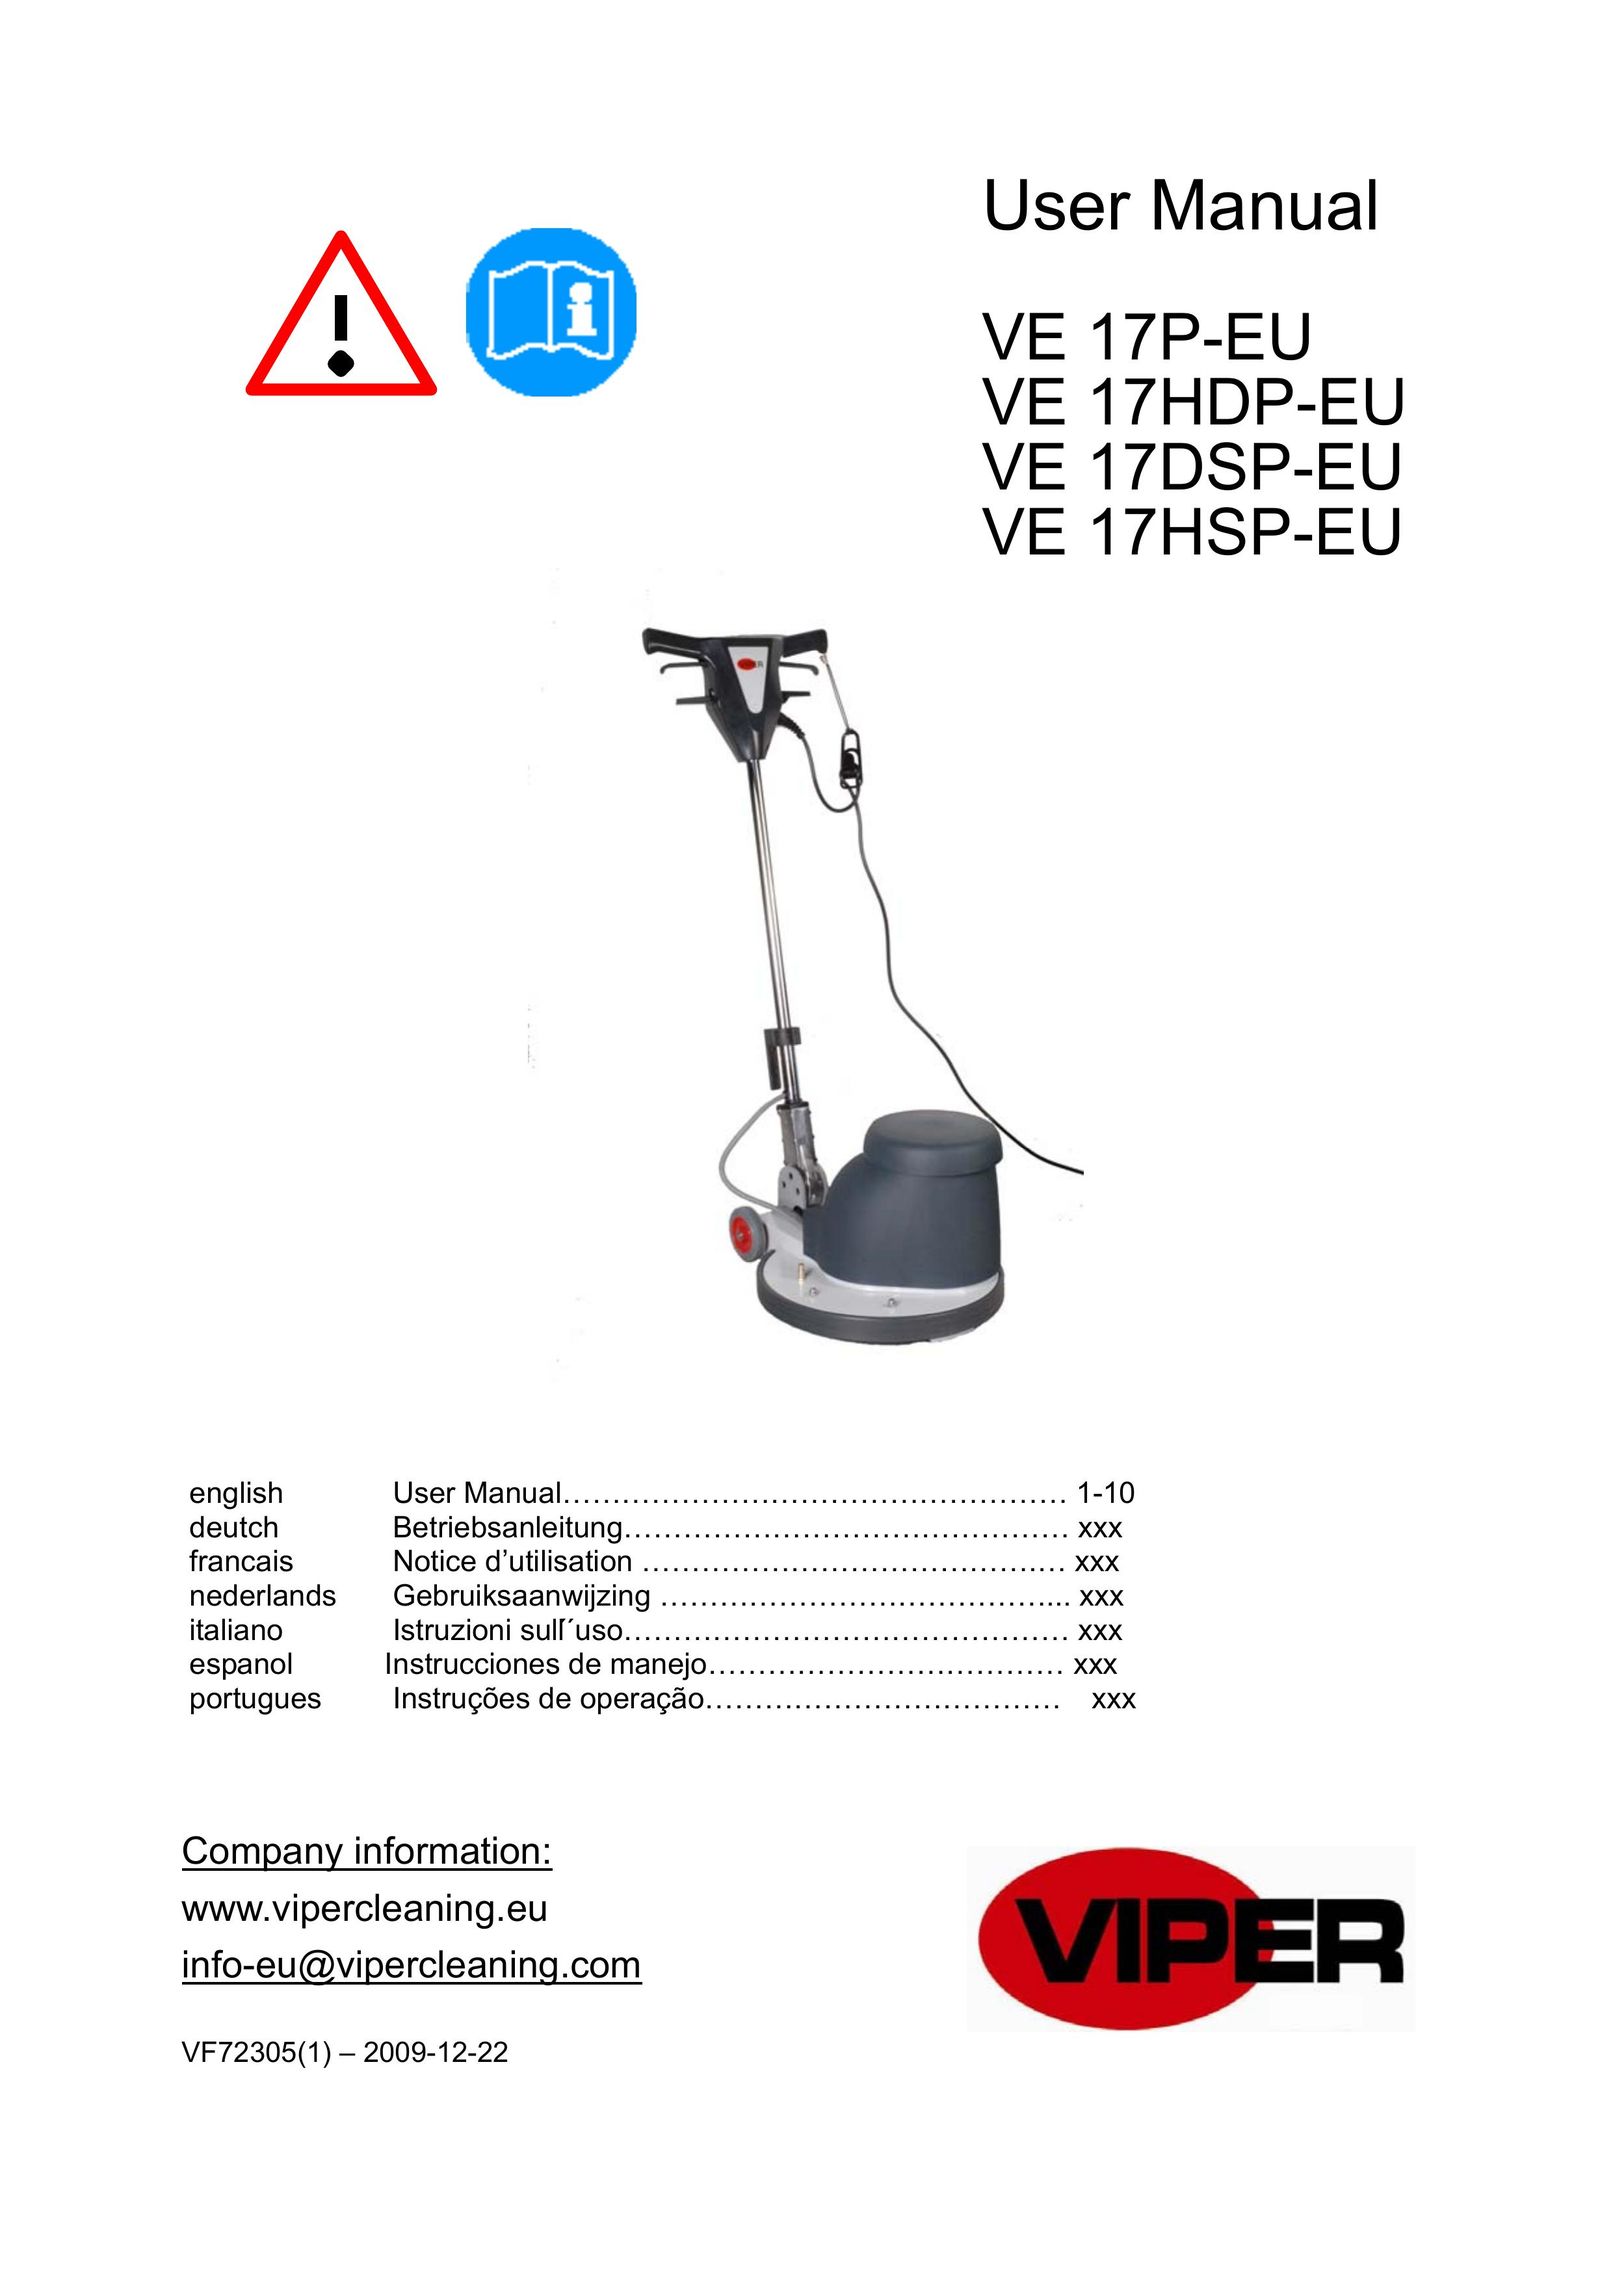 Viper VE 17HSP-EU Vacuum Cleaner User Manual